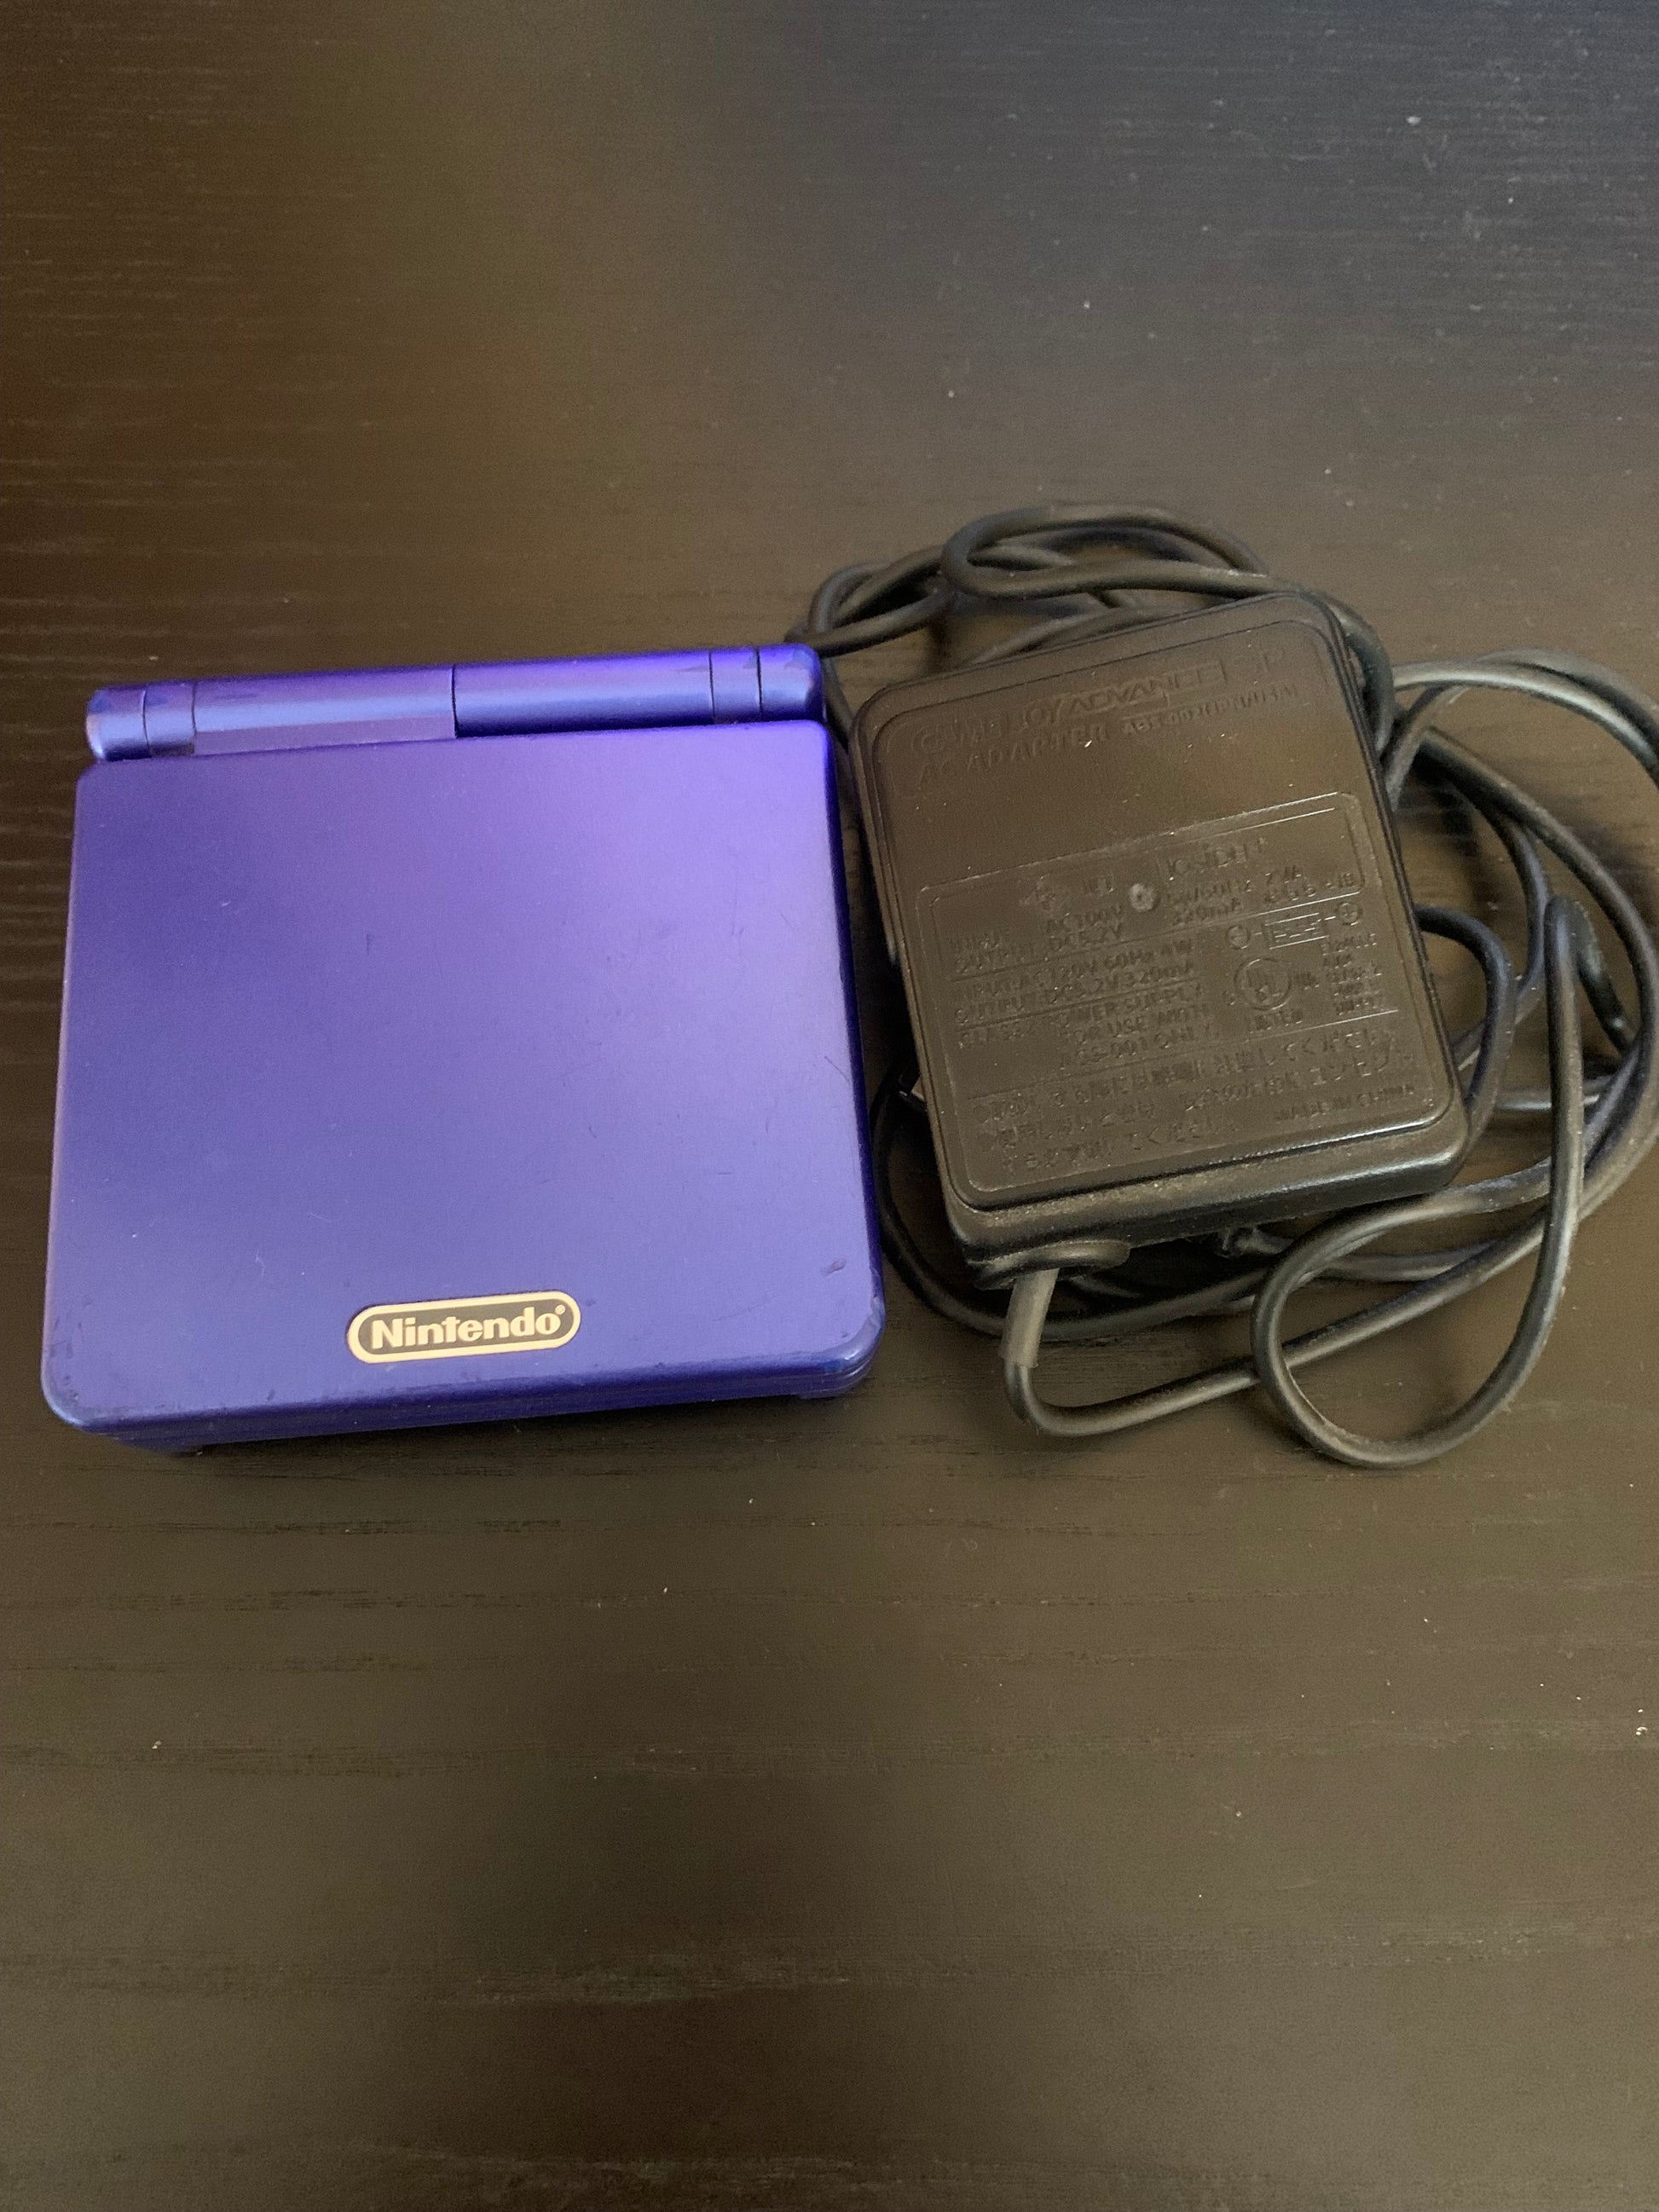 Cobalt Game Boy Advance SP System